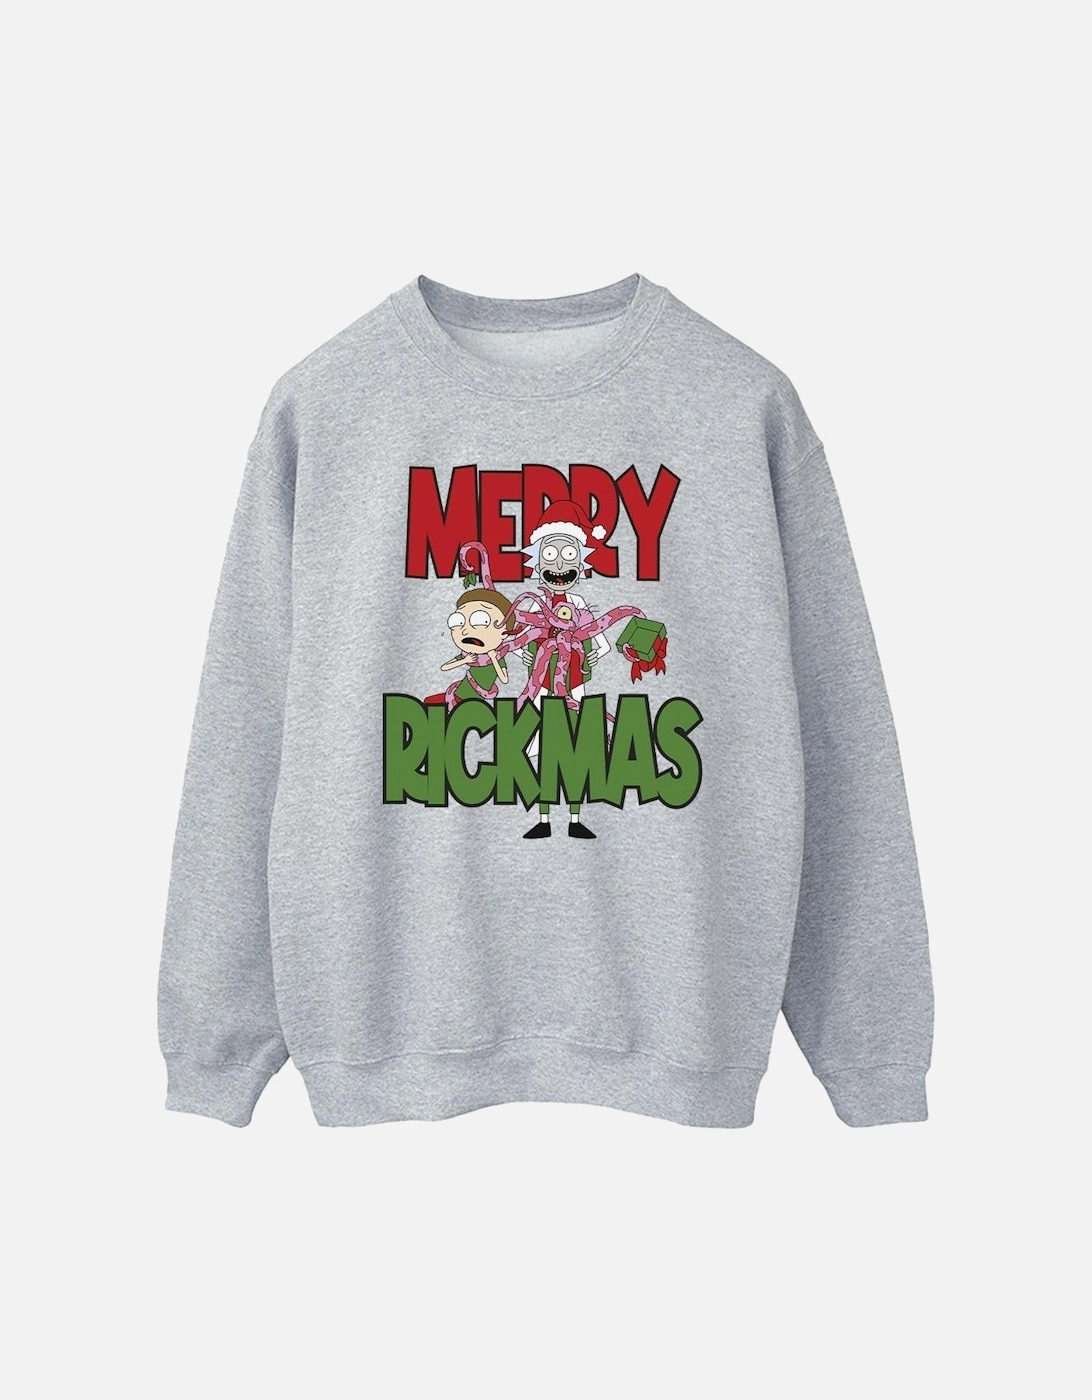 Mens Merry Rickmas Sweatshirt